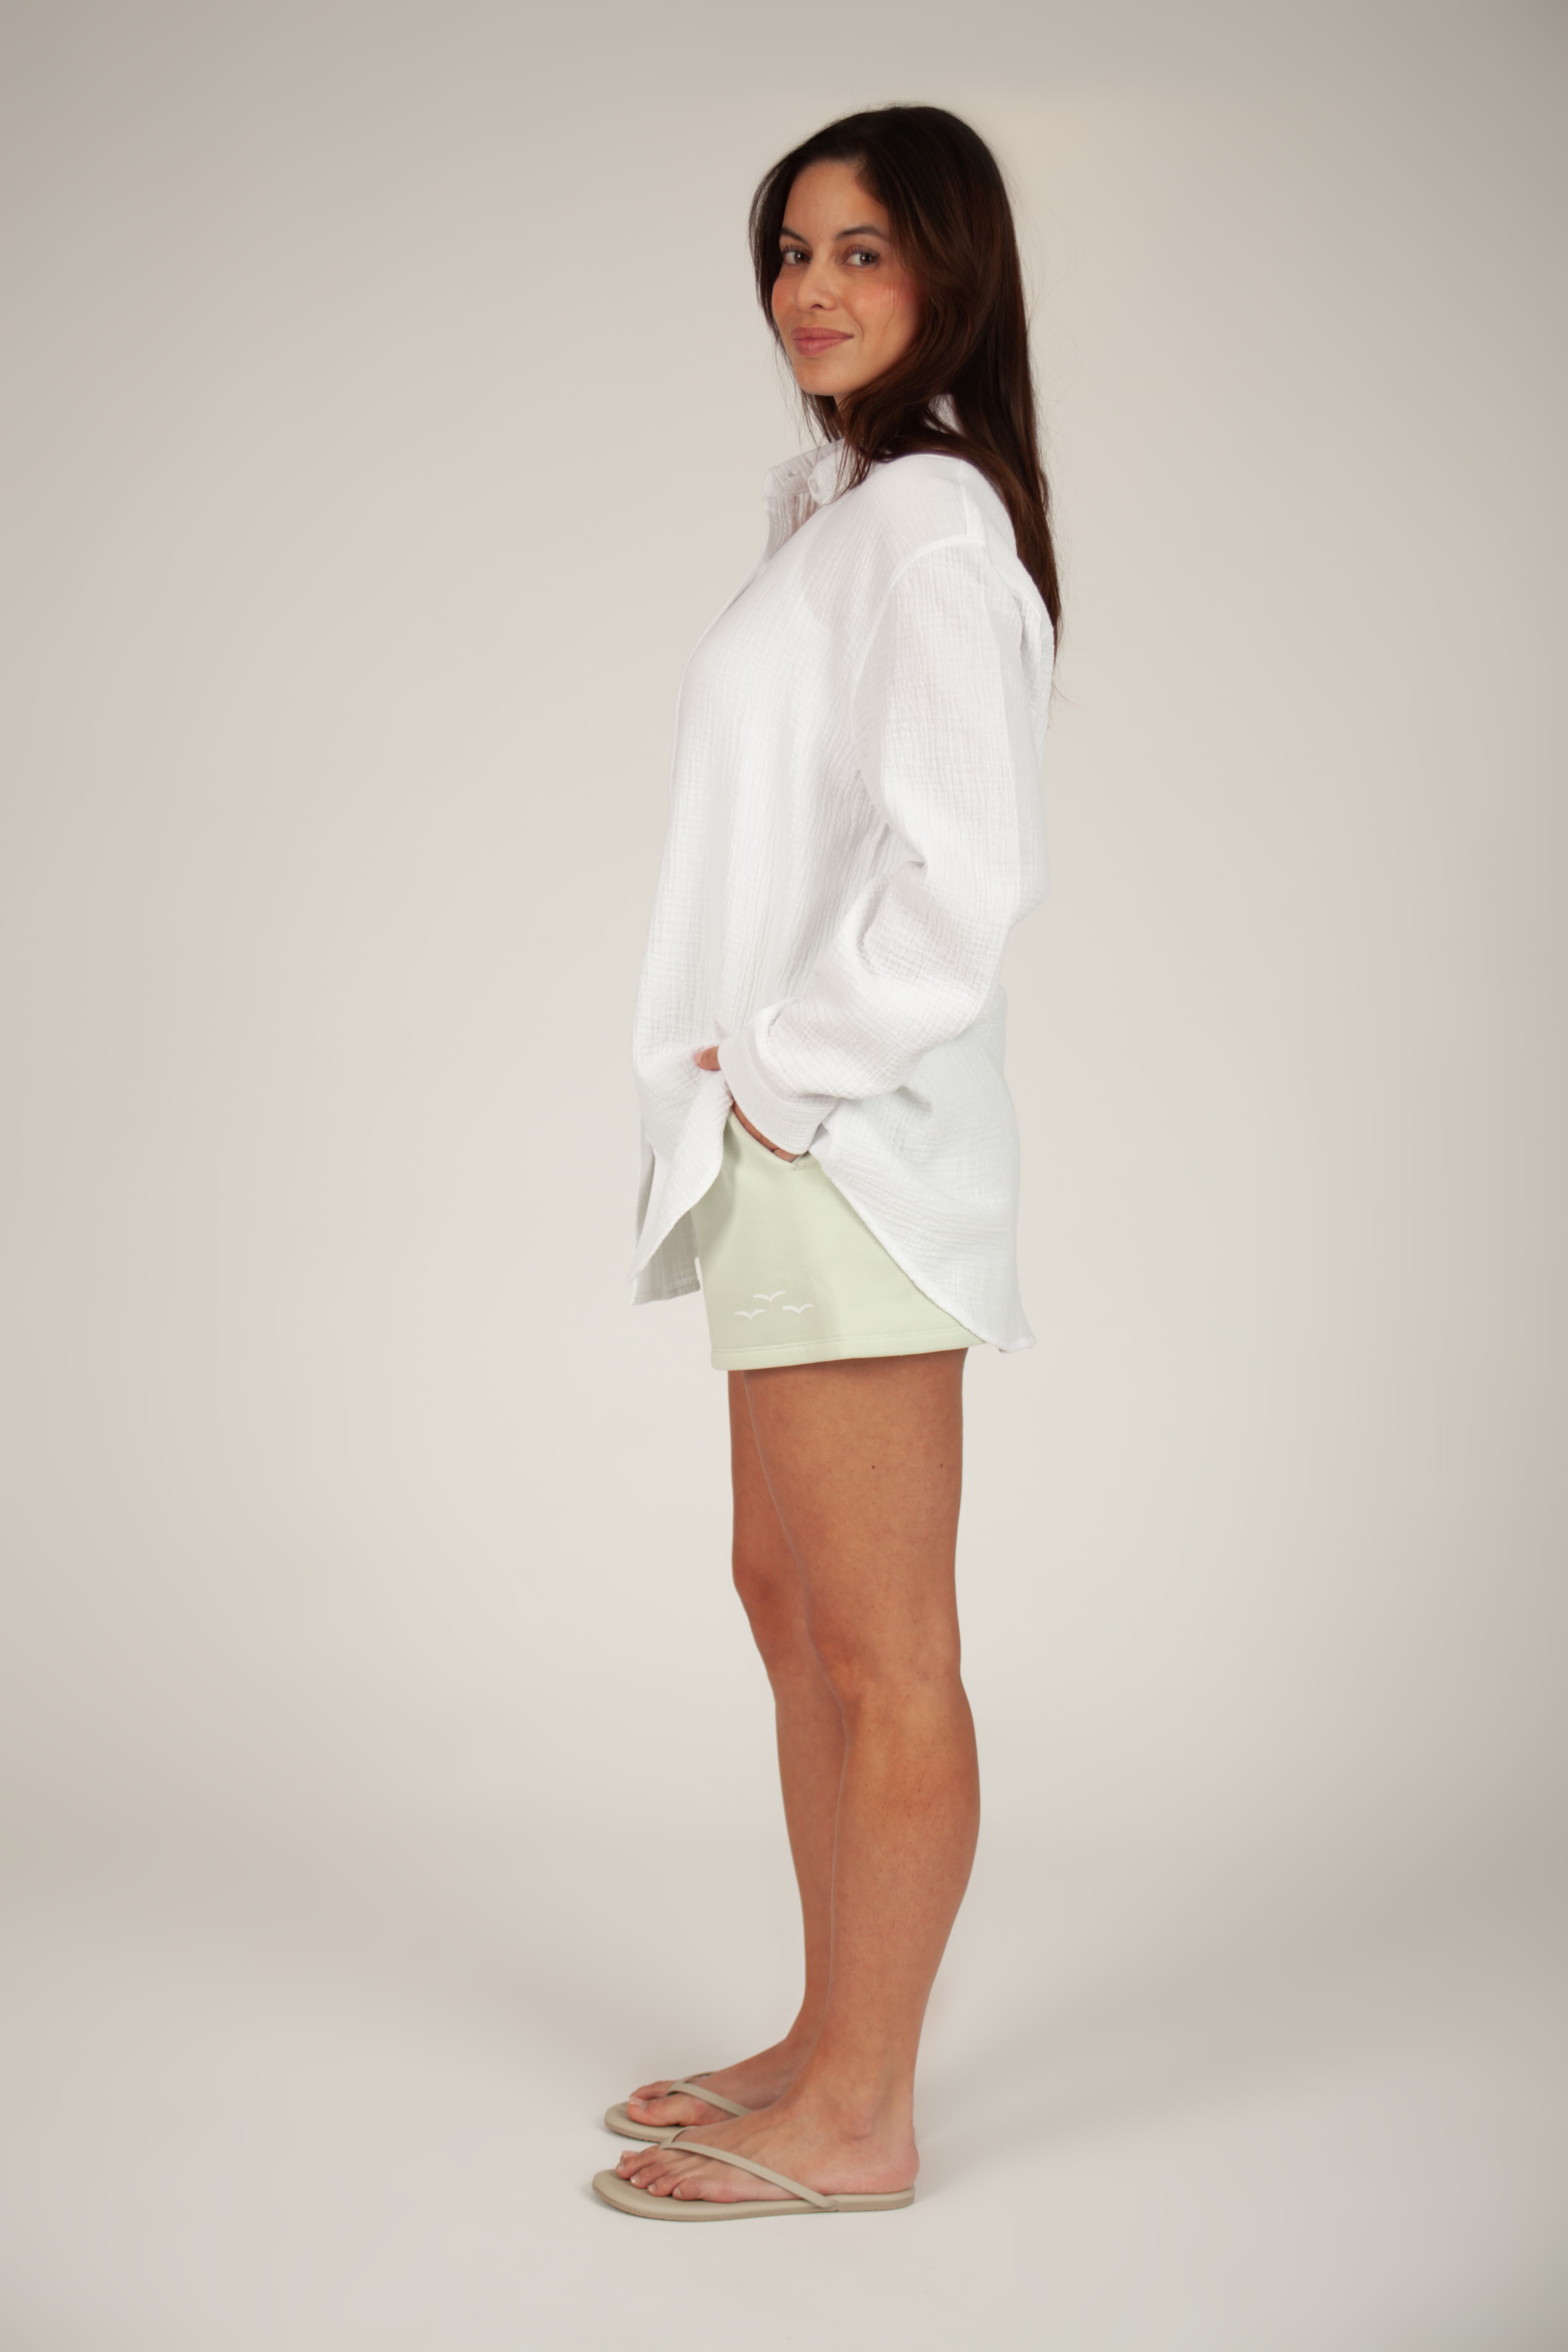 Gauze bright white shirt and silver green fleece shorts set